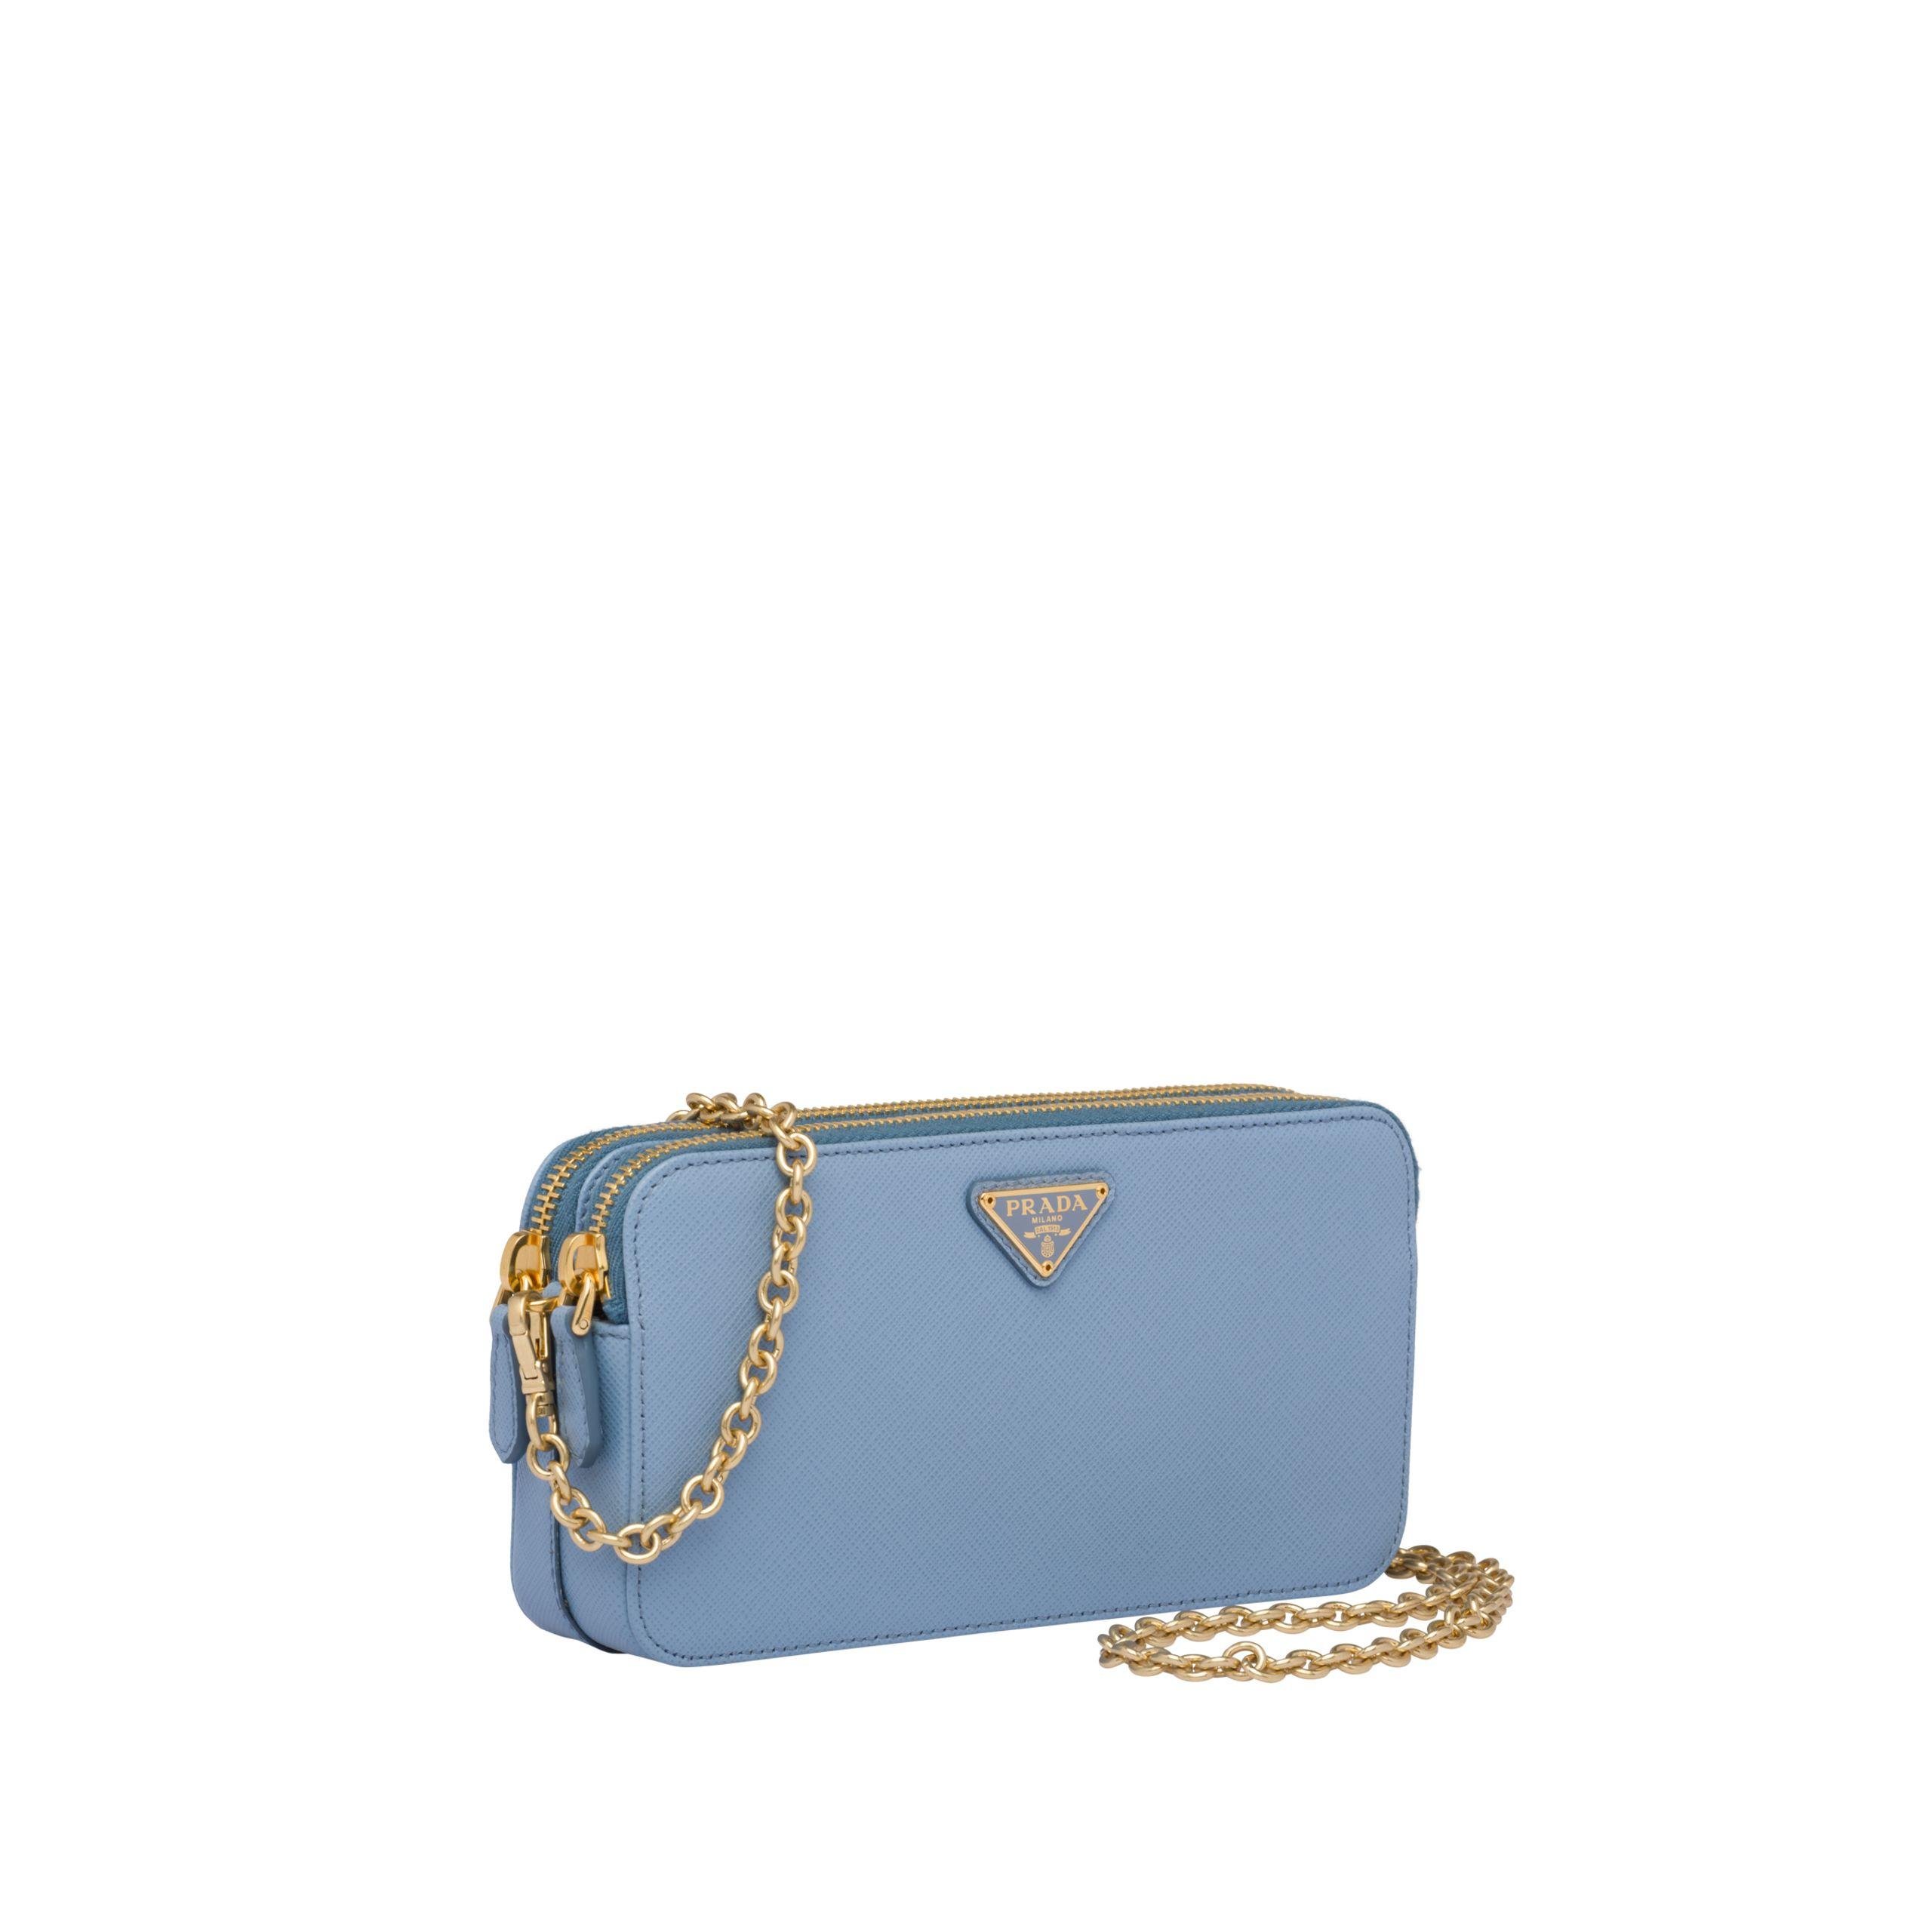 Prada Saffiano Leather Mini Shoulder Bag in Blue | Lyst